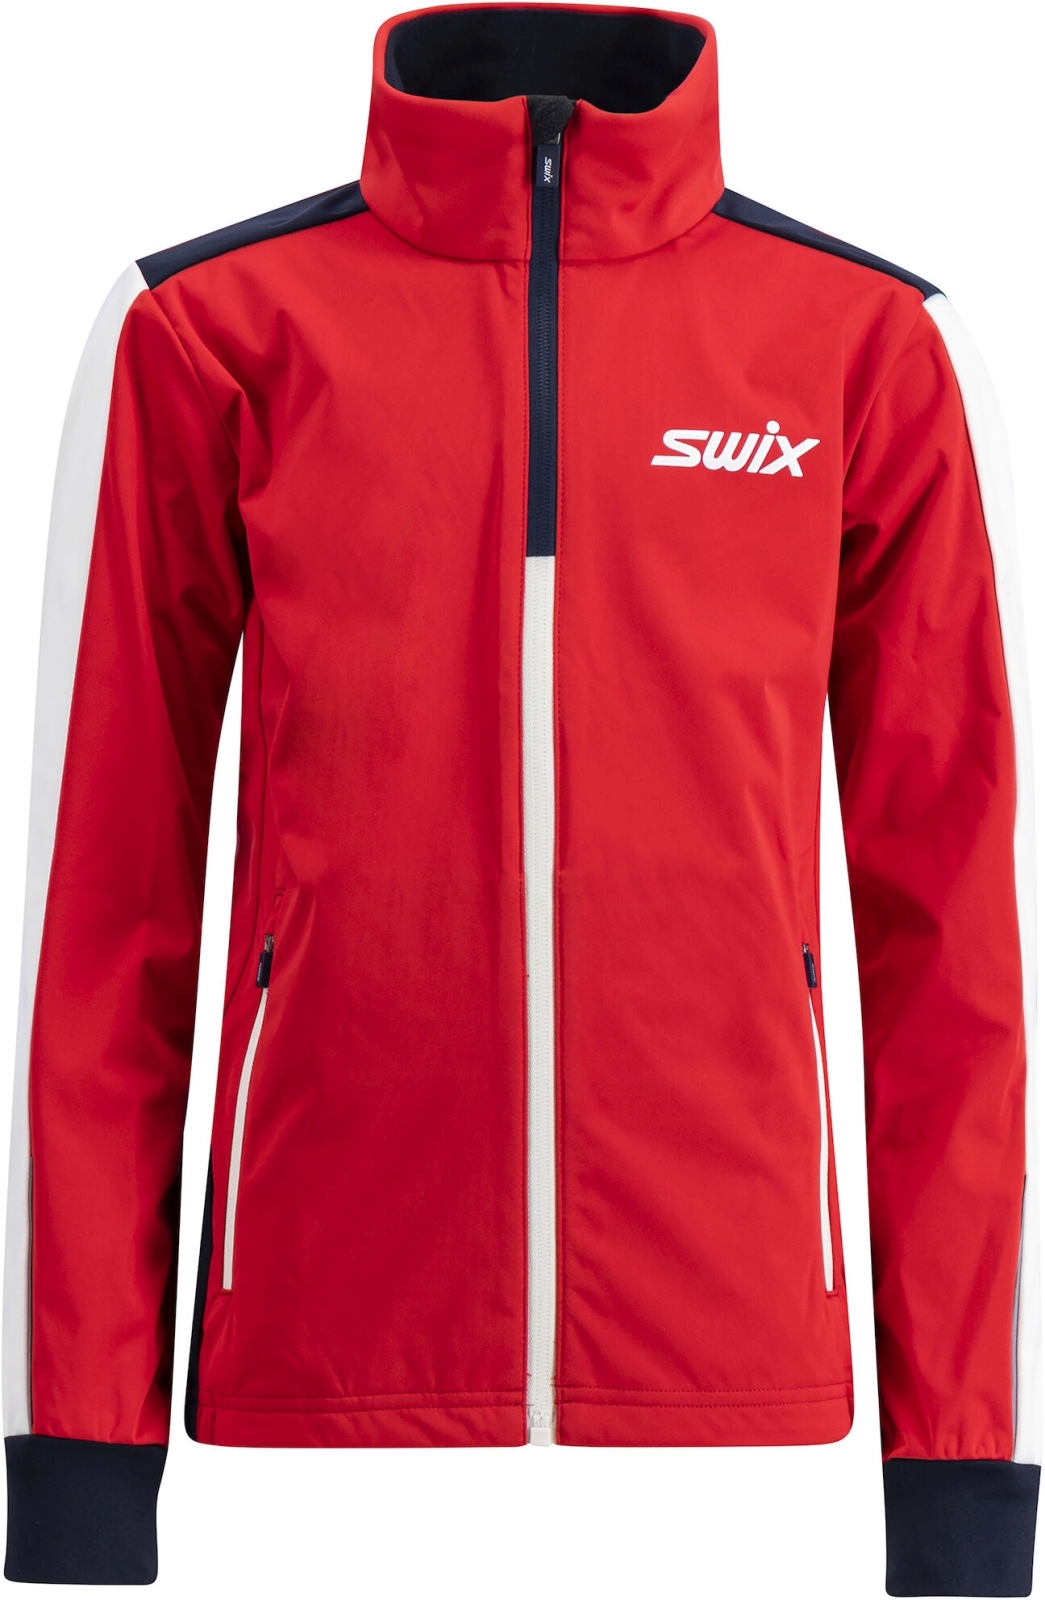 Swix Cross Jacket - Swix red 128